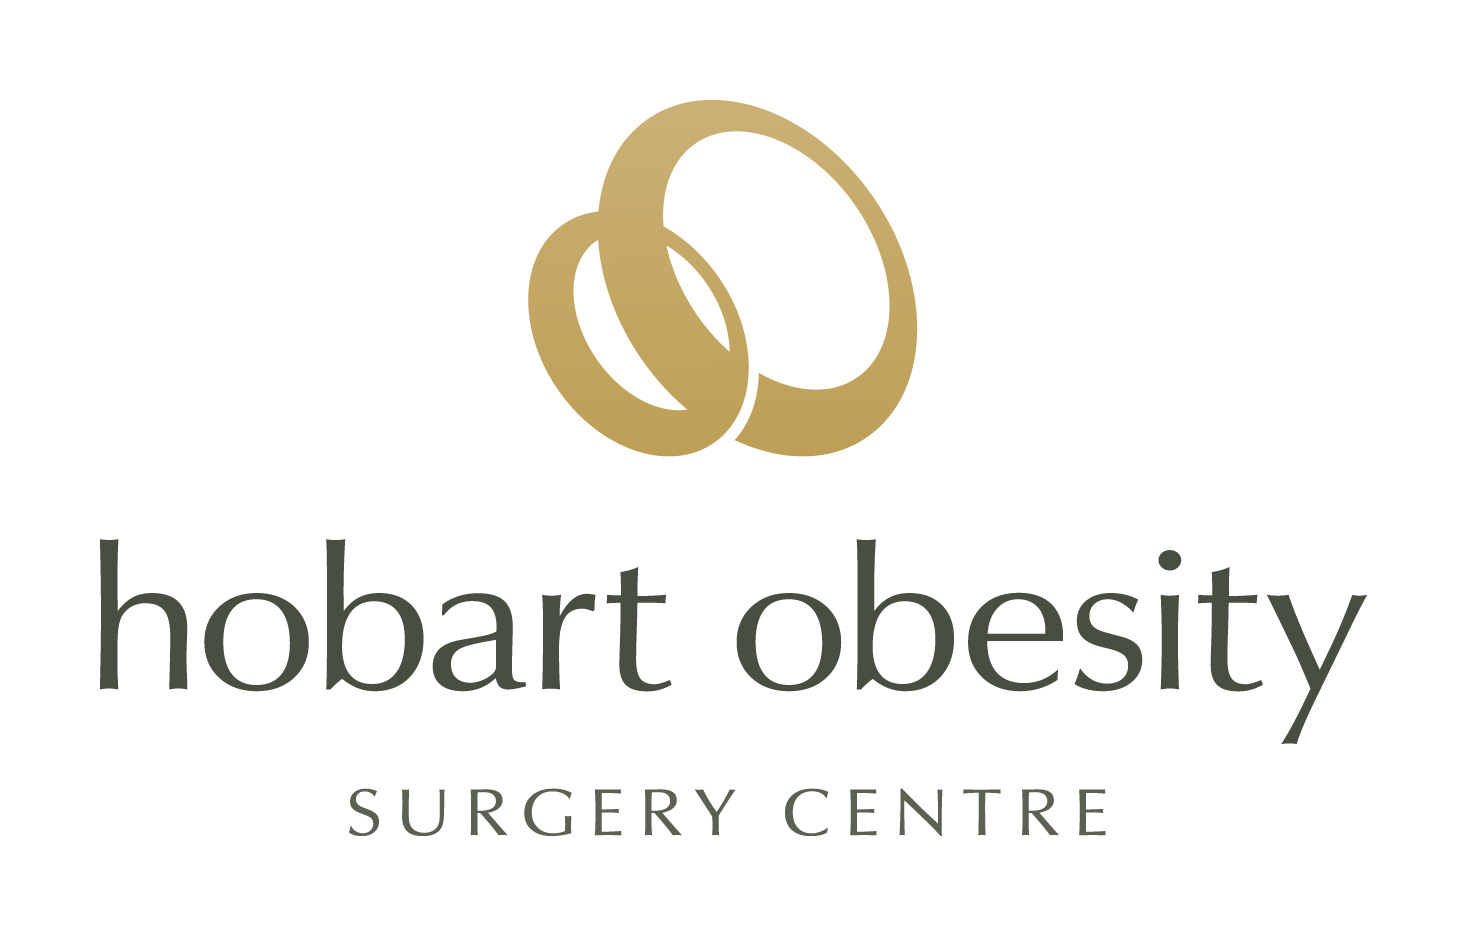 Hobart Obesity Surgery Centre